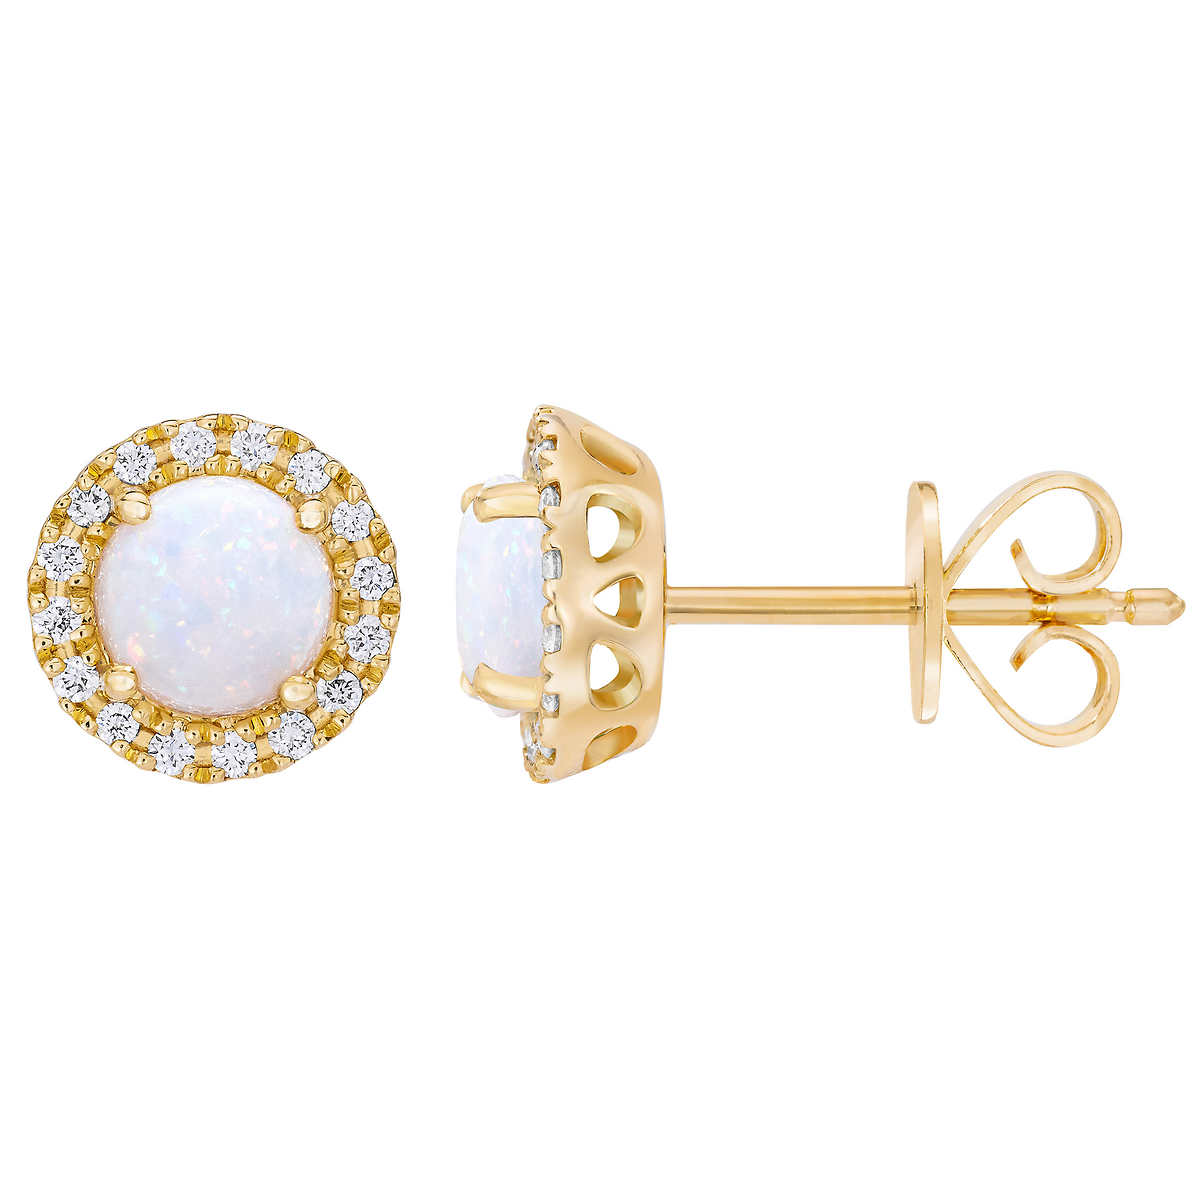 Australian Opal and Diamond 14kt Yellow Gold Earrings Costco